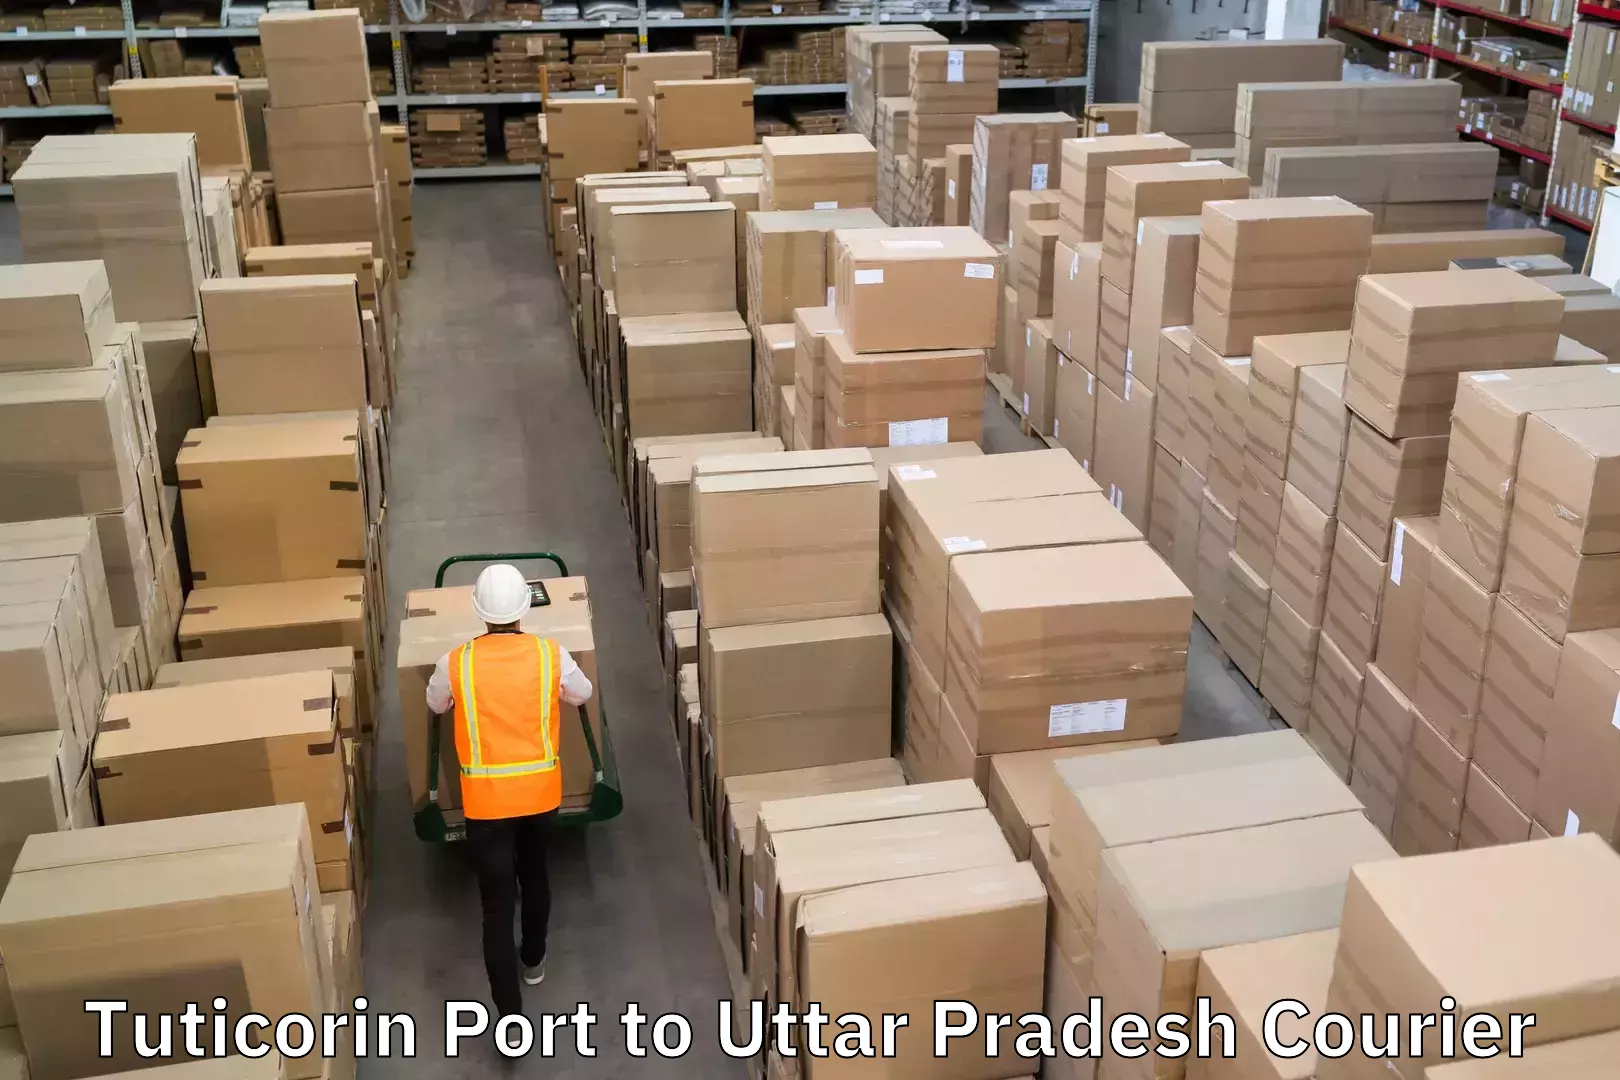 Business shipping needs Tuticorin Port to Uttar Pradesh